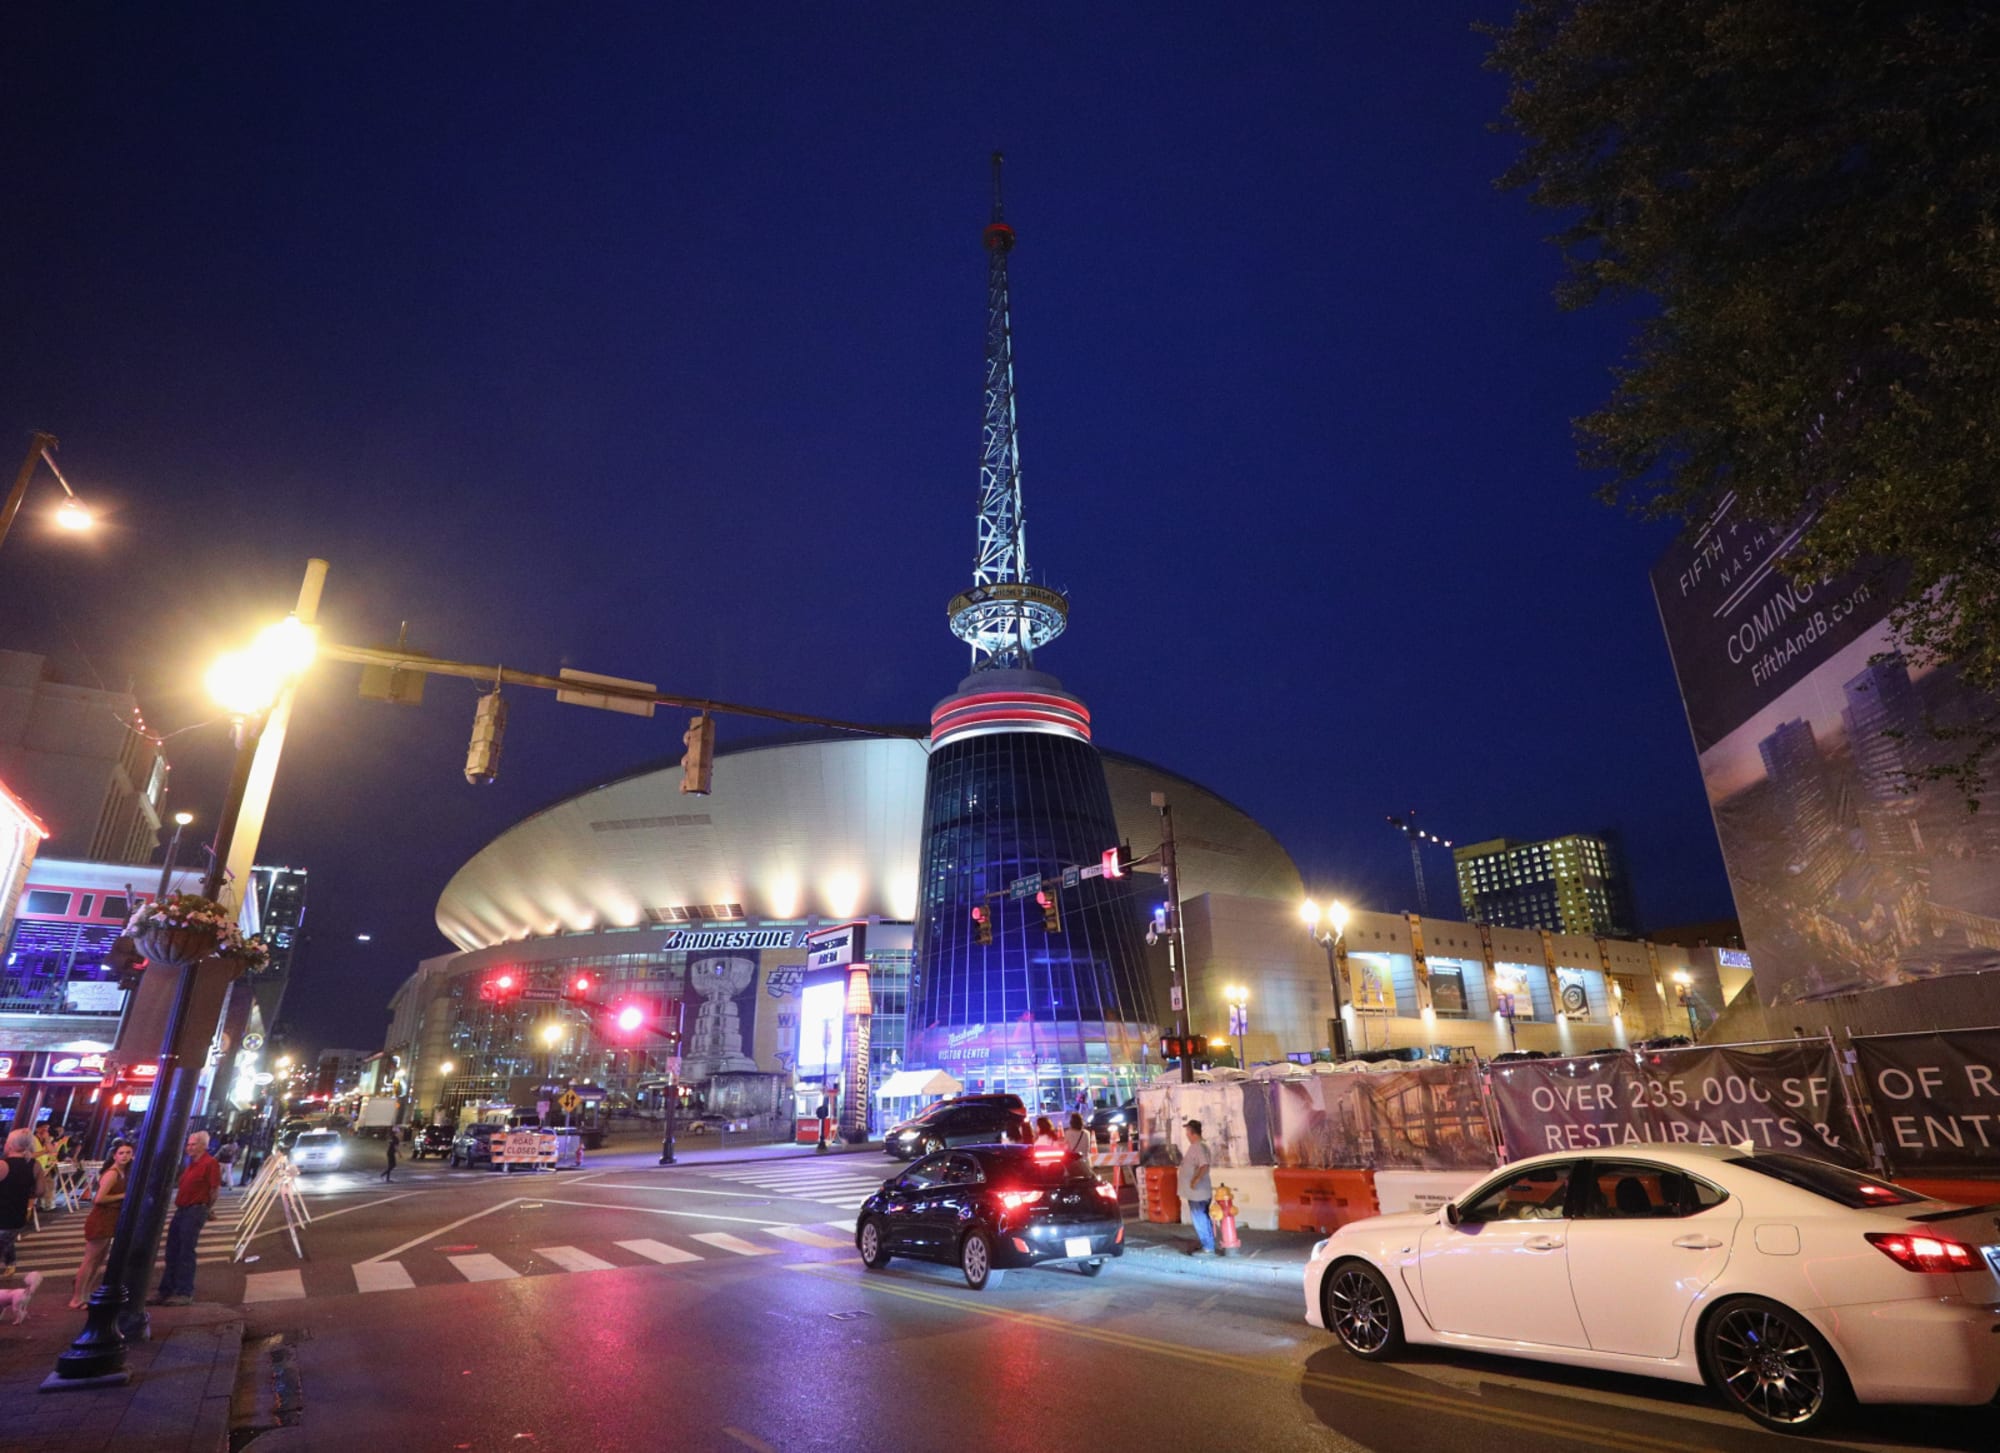 Bridgestone Arena has helped make Nashville what it is today